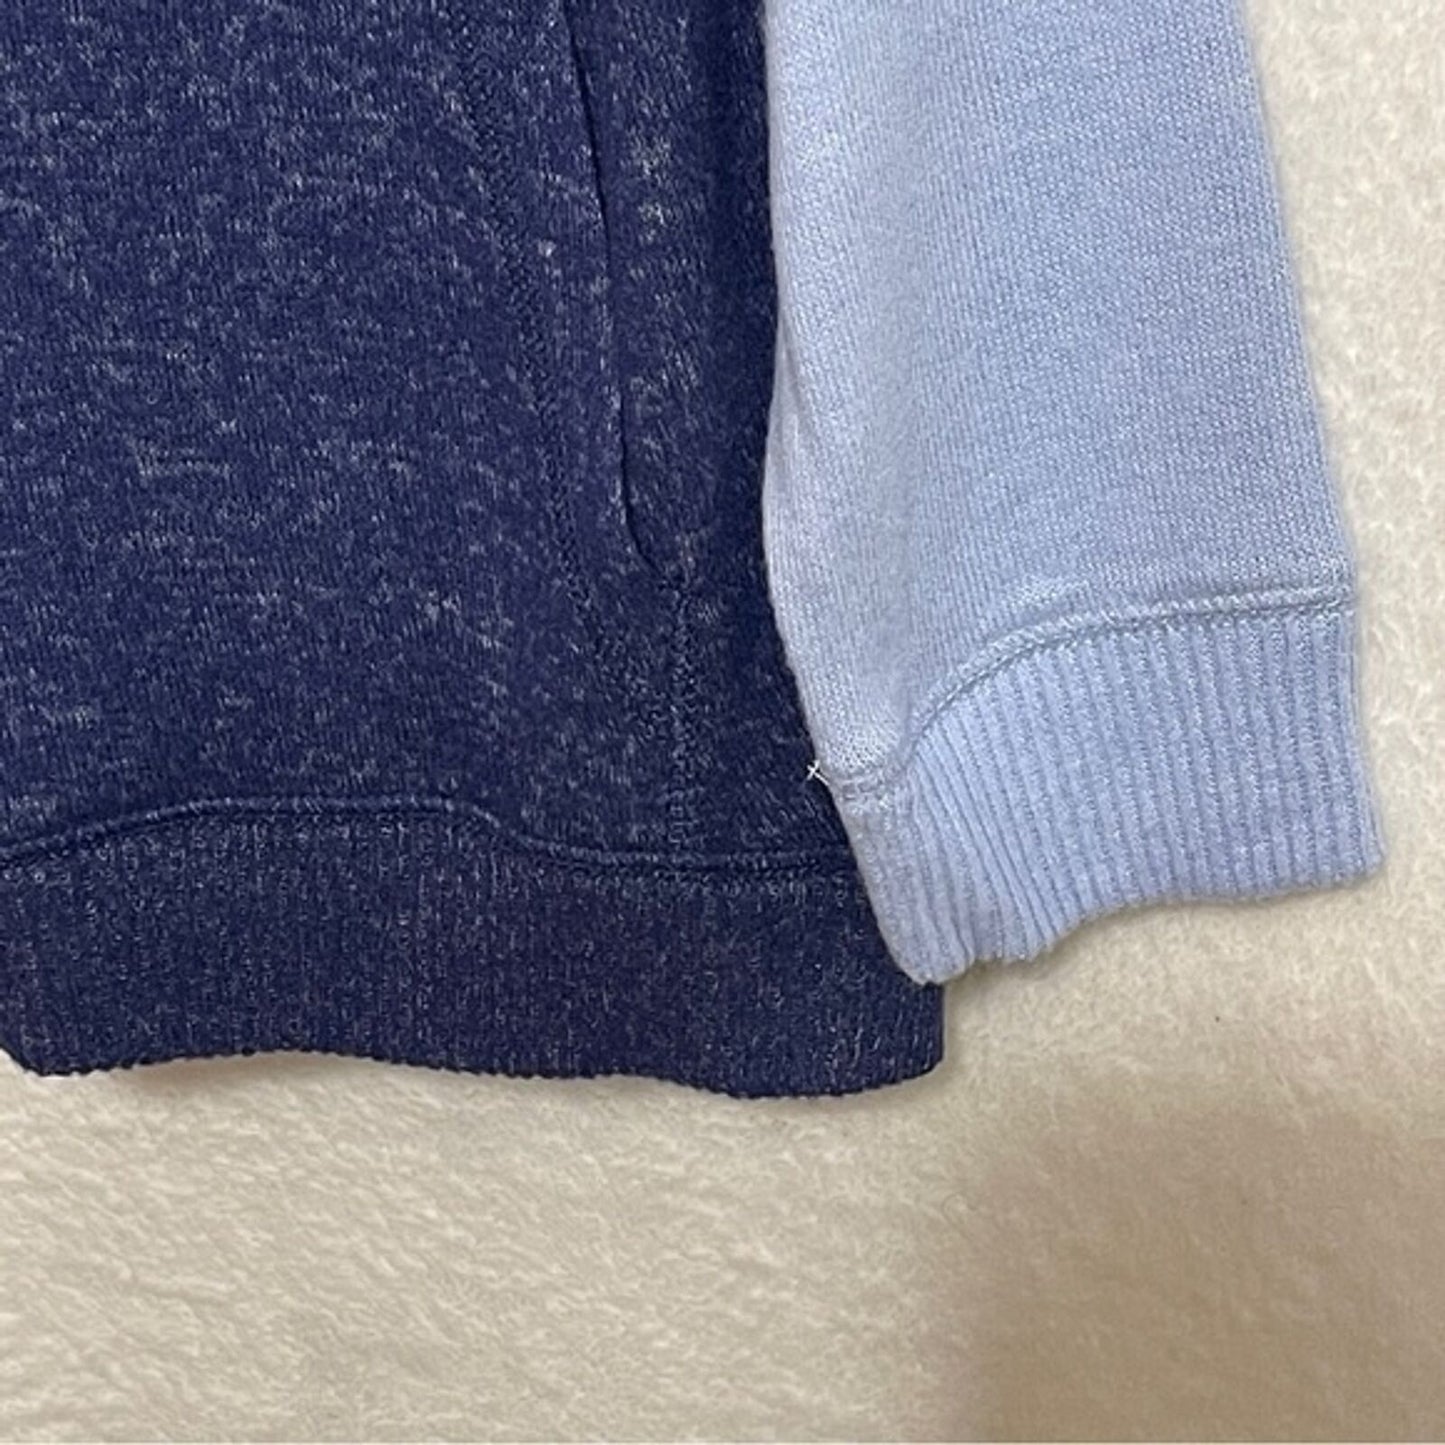 RUMI RYDER Hoodie Boys Size Small Blue Pullover Lightweight Sweatshirt Top